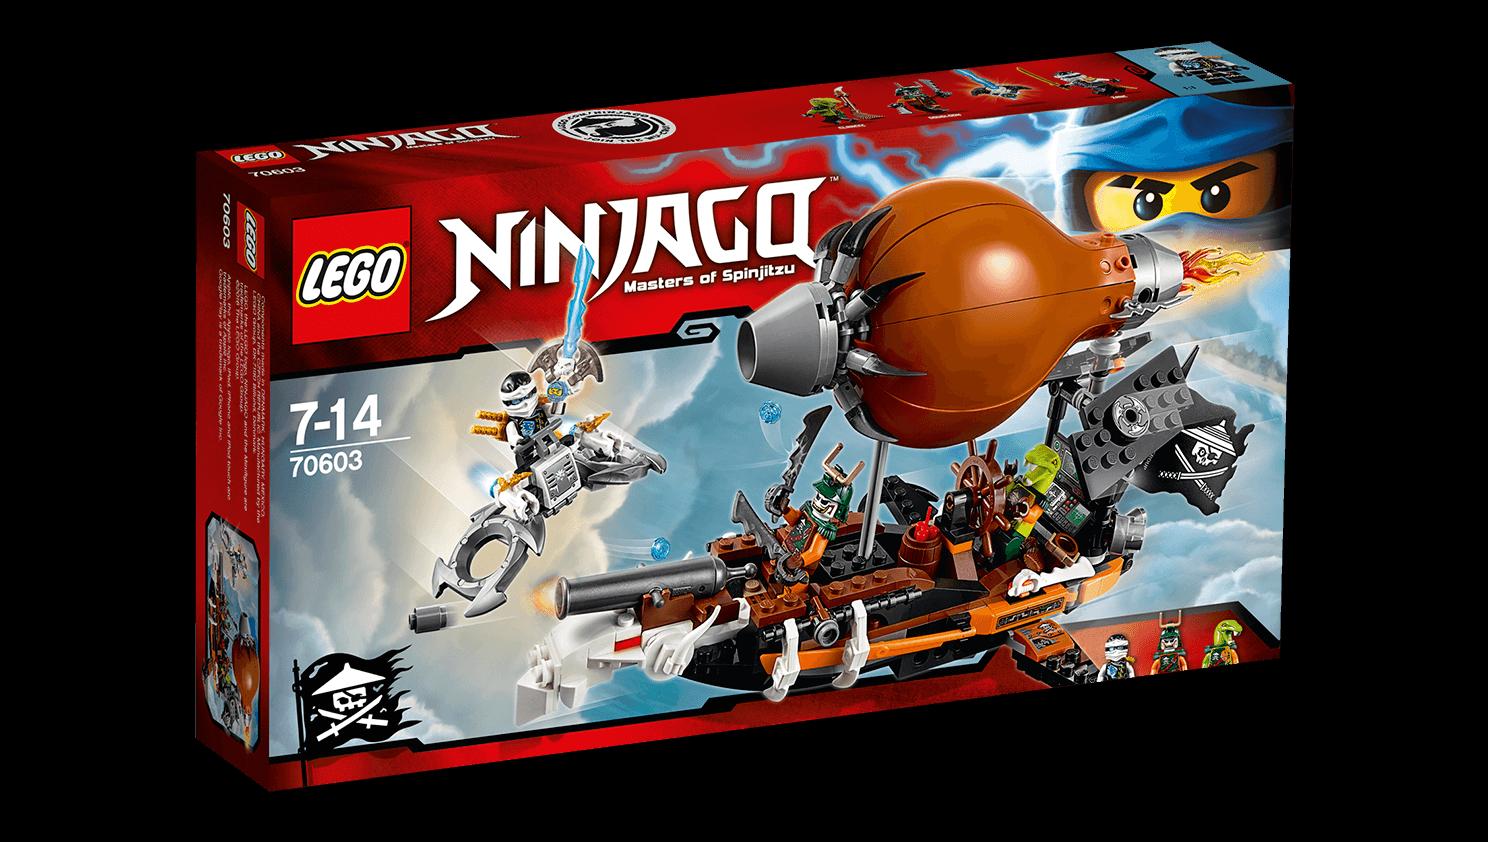 Lego Ninjago Raid Zeppelin 7-14 ani 